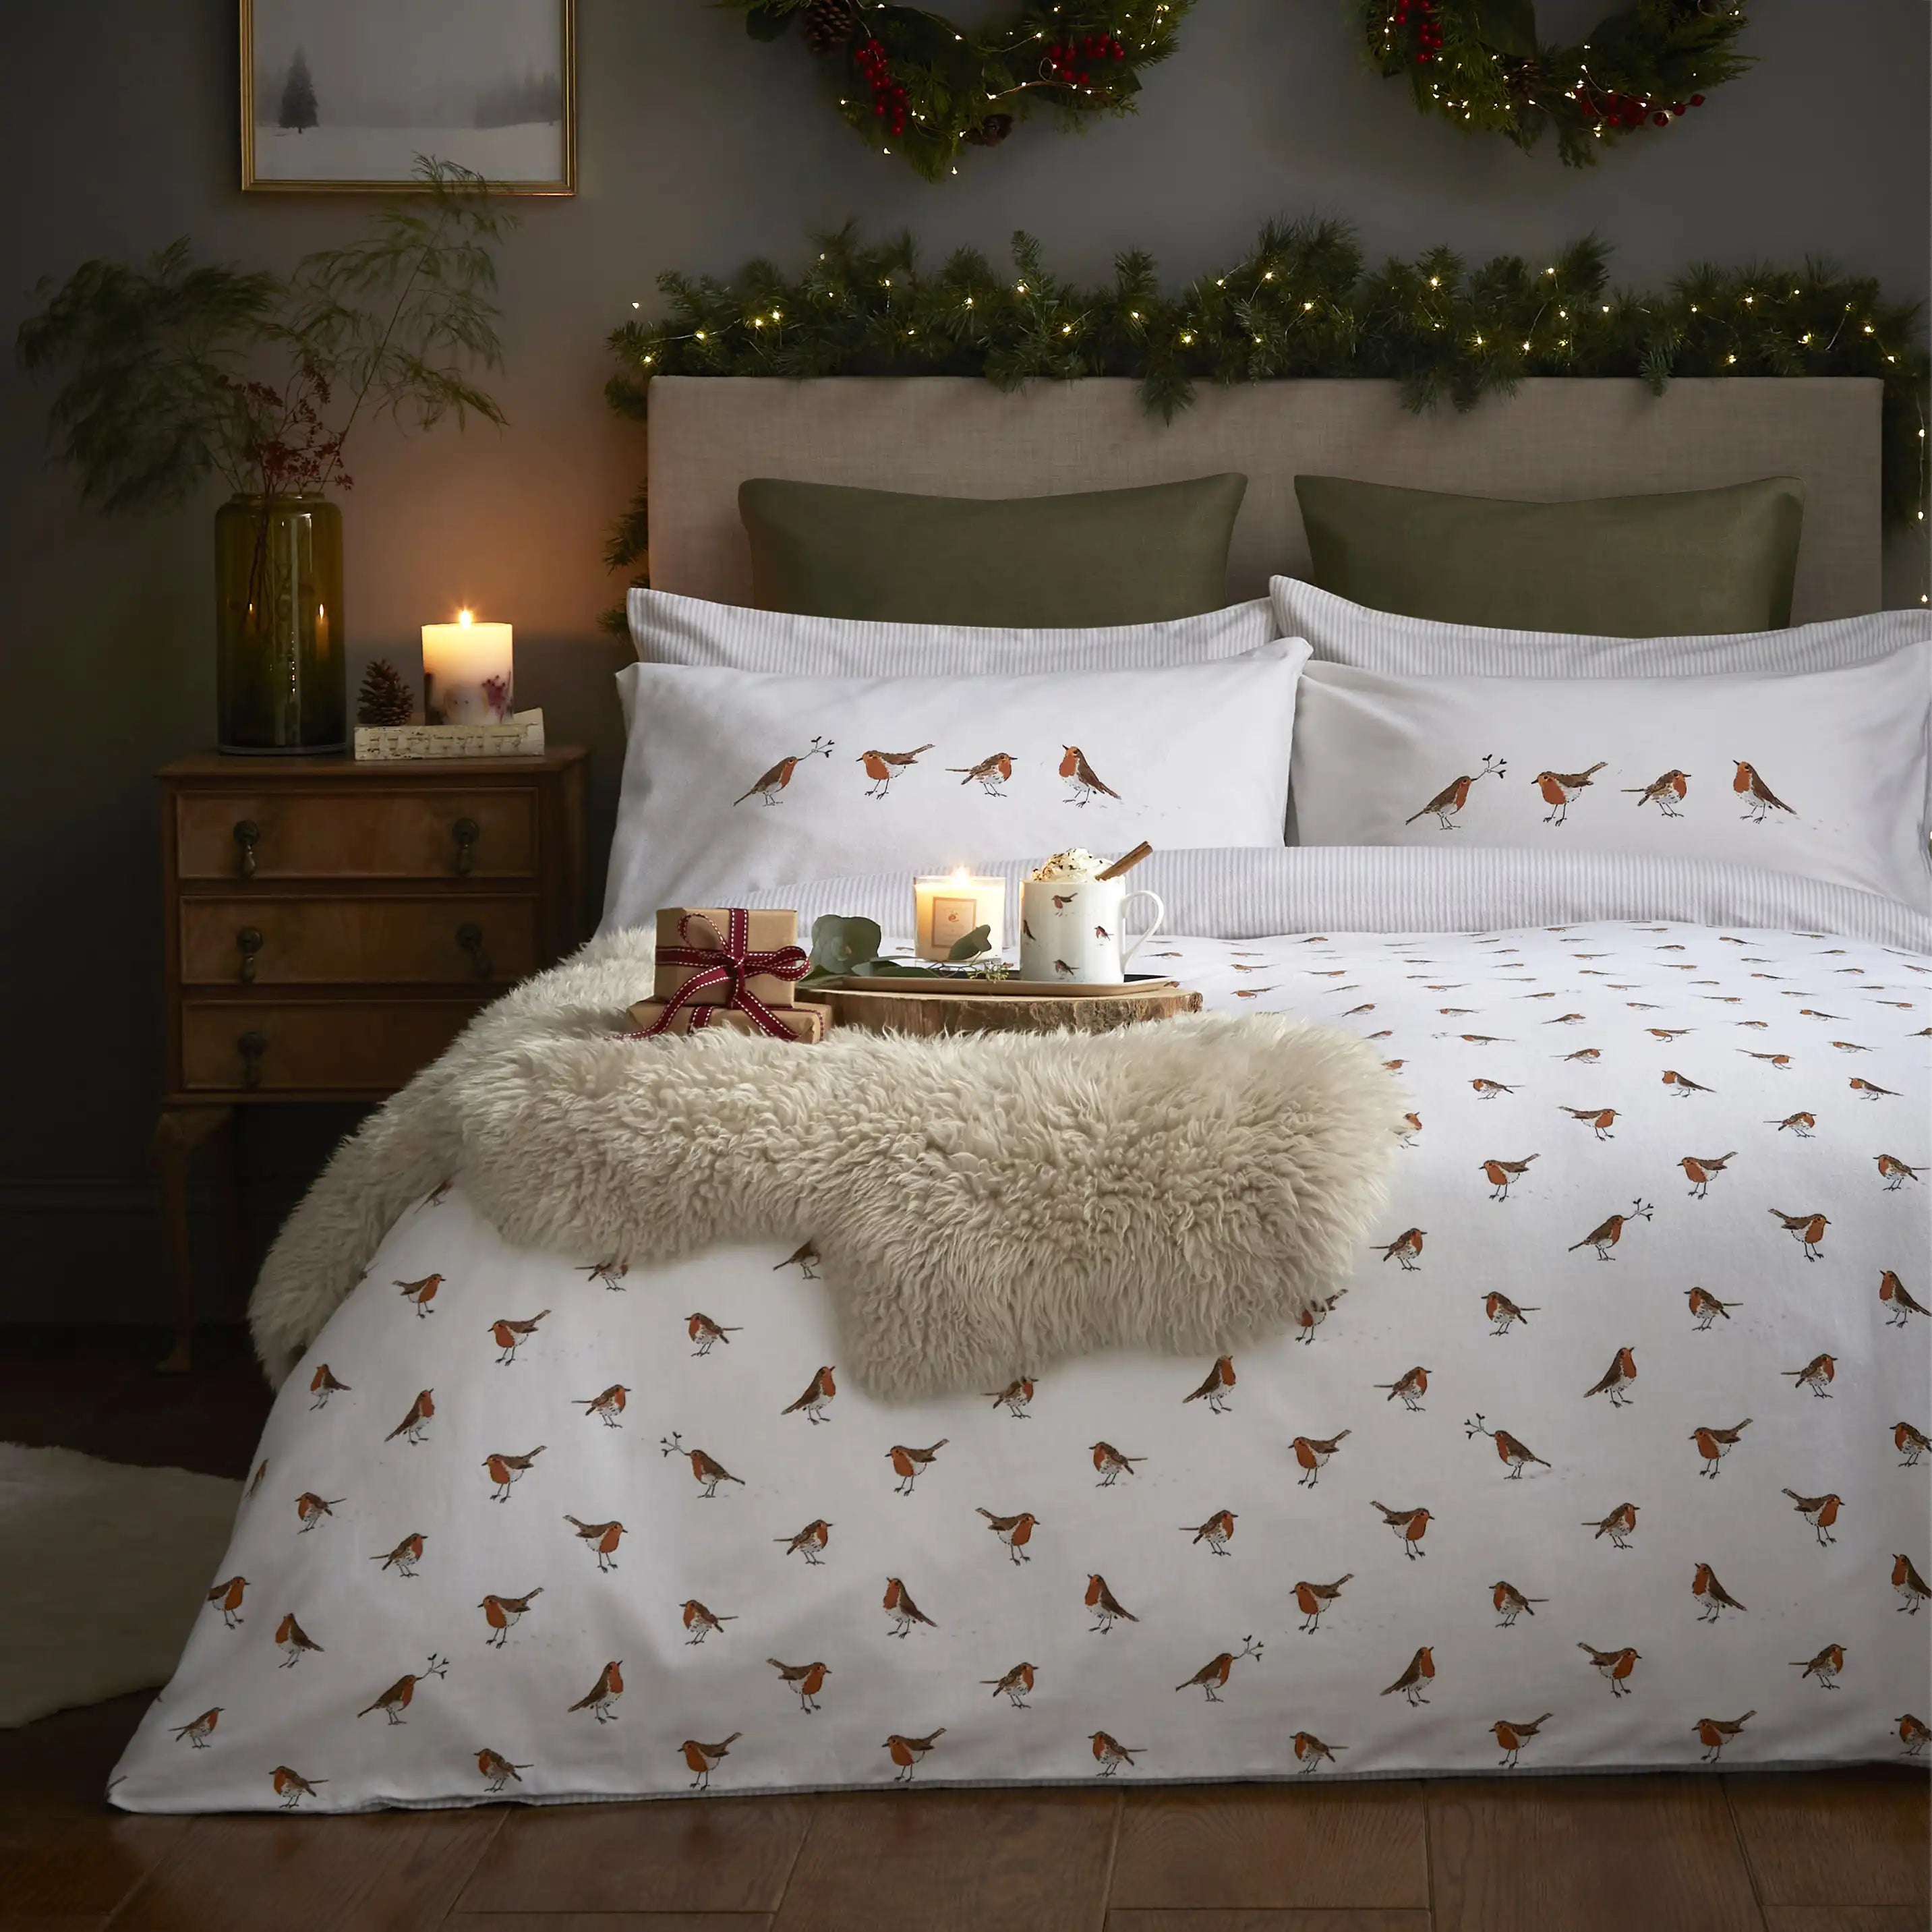 6 Christmas Bedding Ideas for Your Festive Home